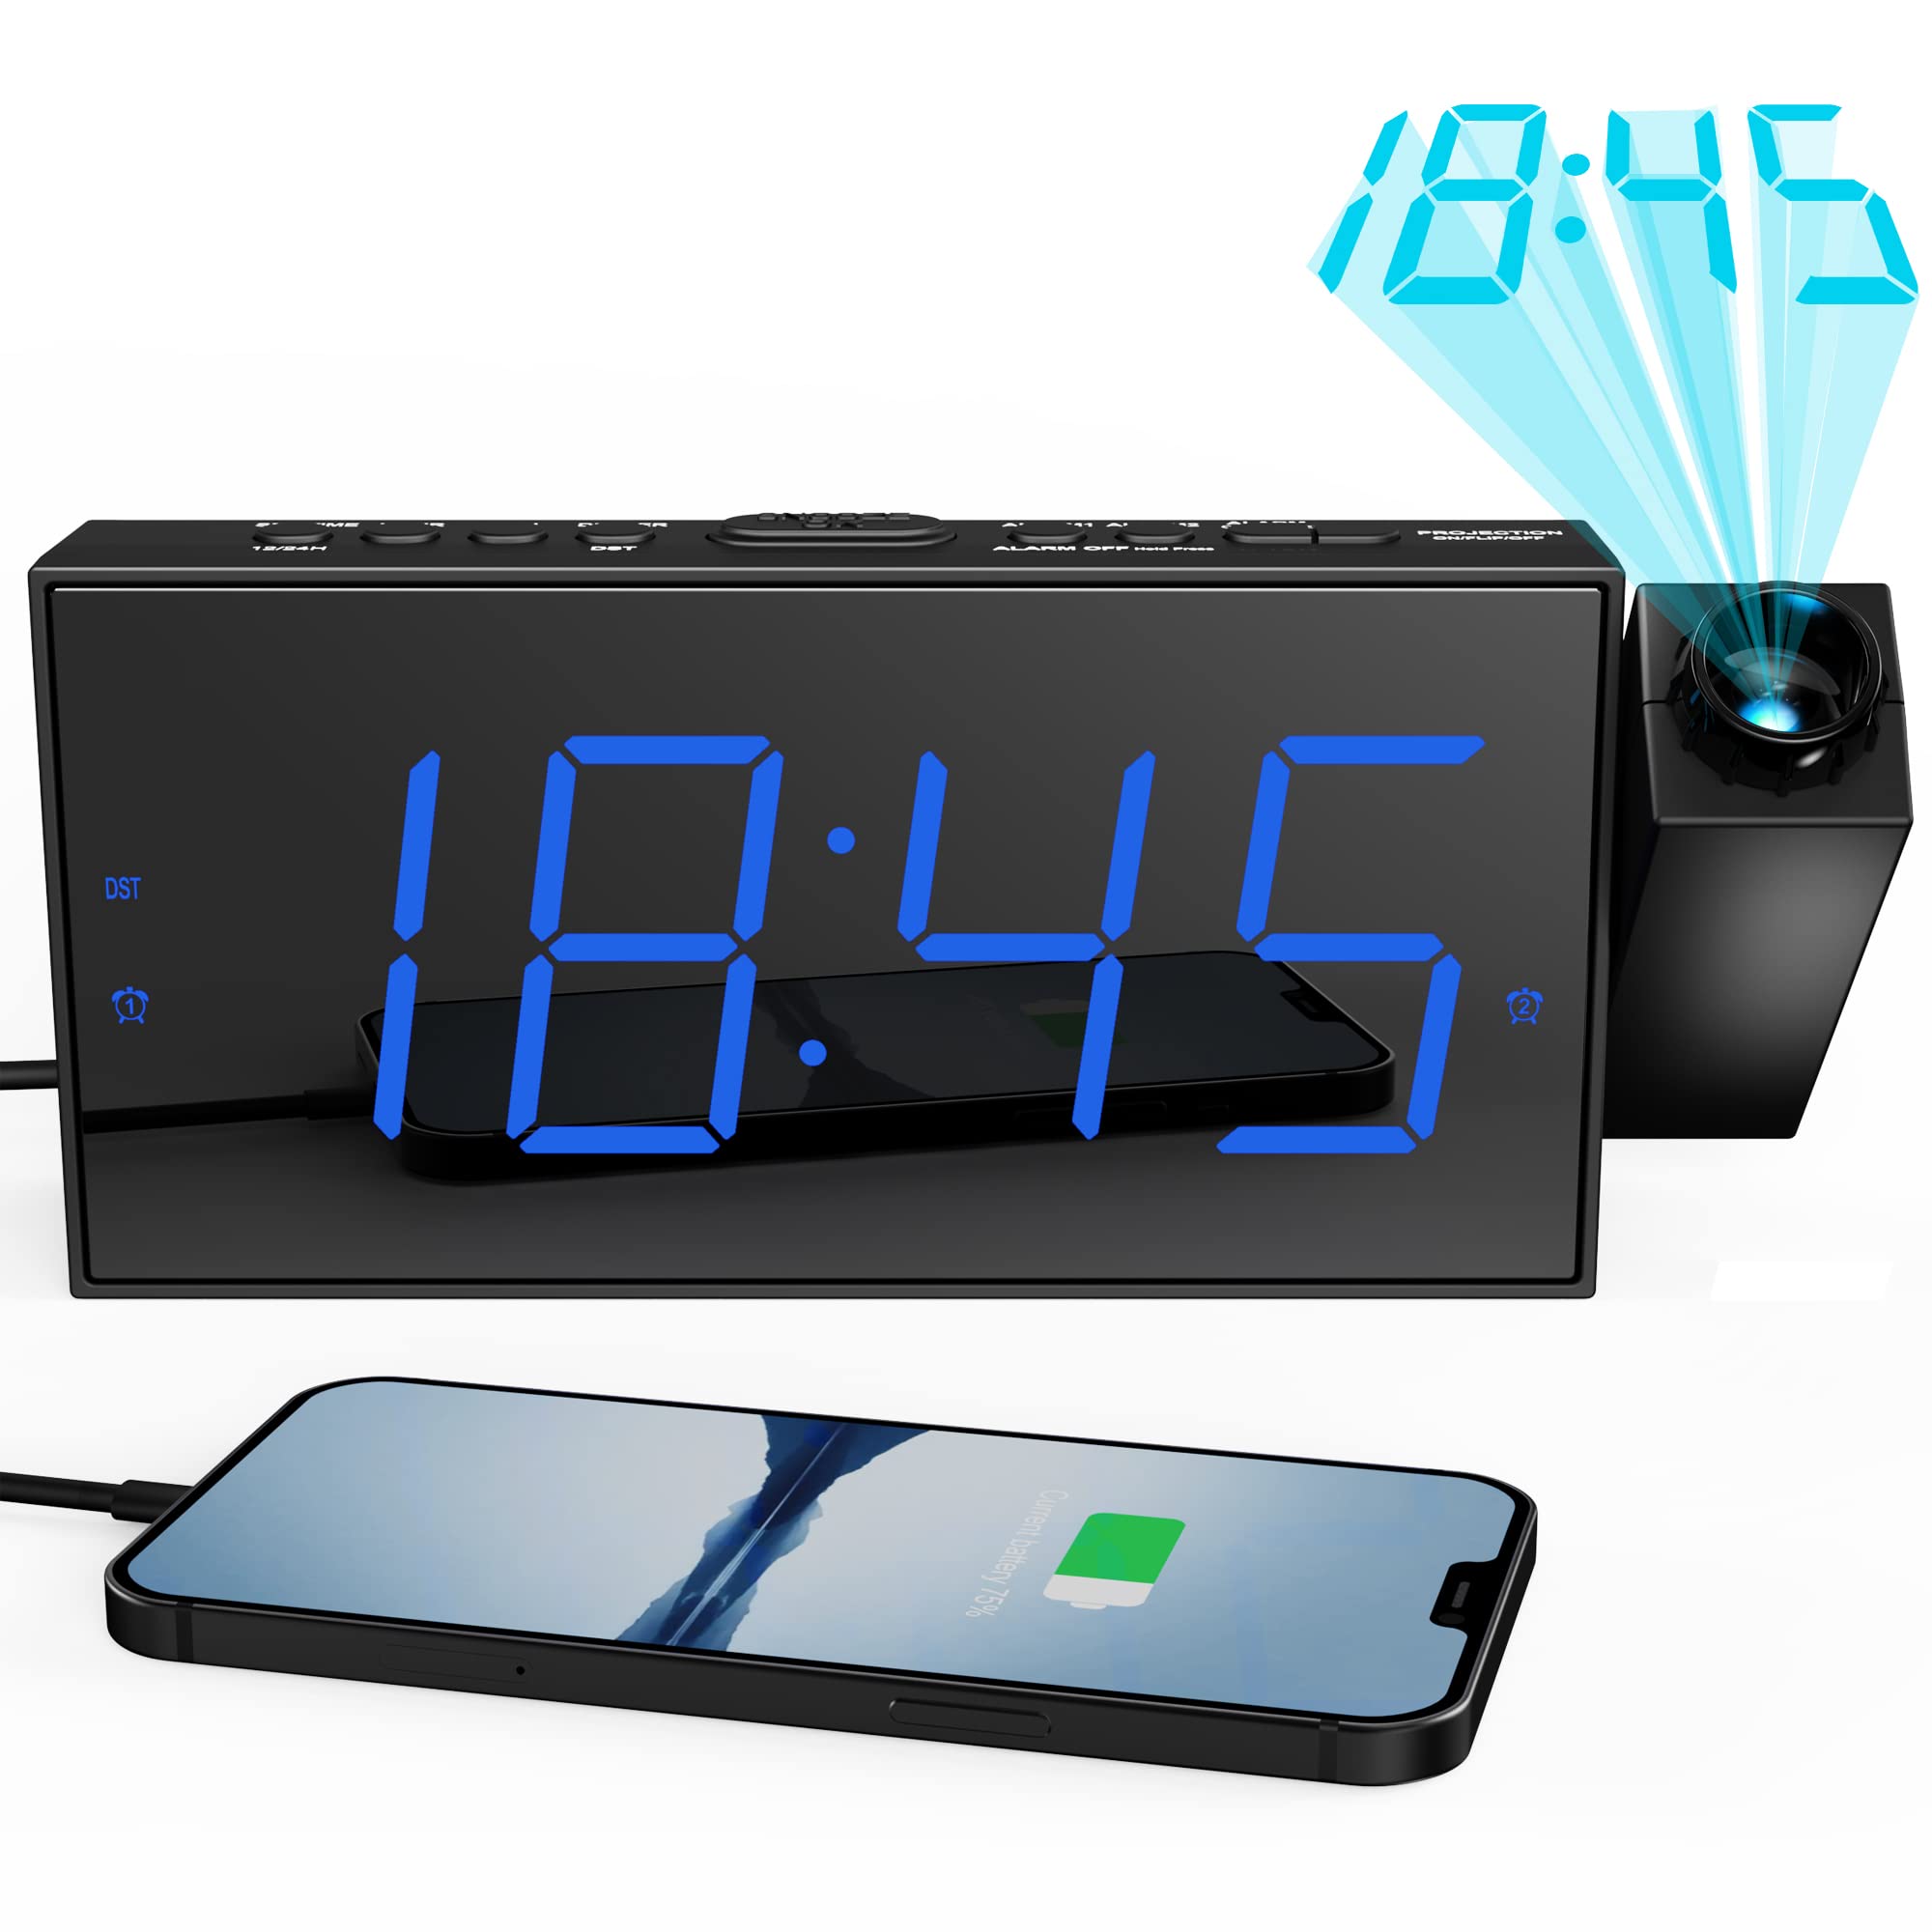 Mesqool Digital Projection Alarm Clocks